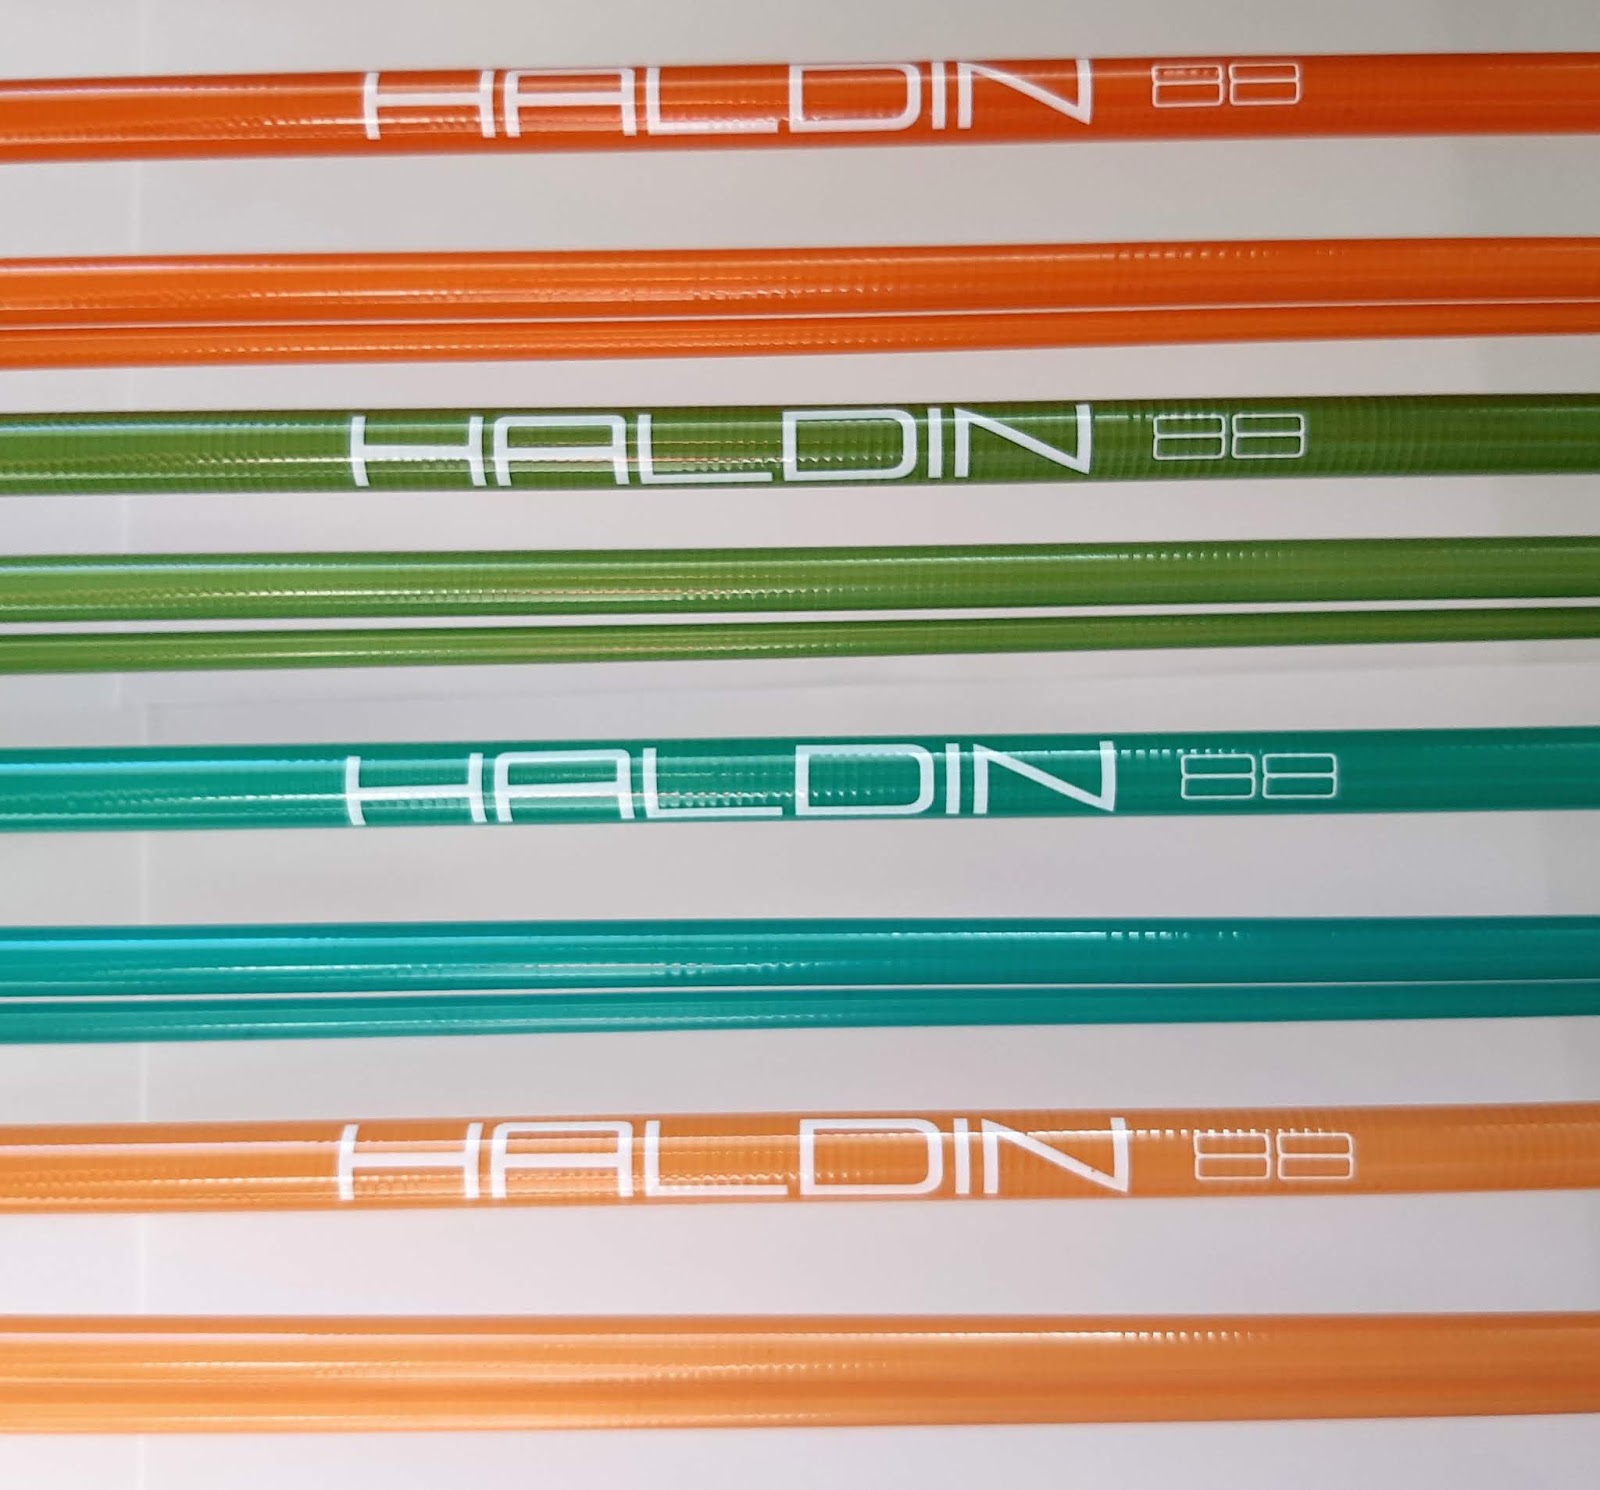 The Fiberglass Manifesto: HALDIN FLY RODS - Introducing HDT Blanks